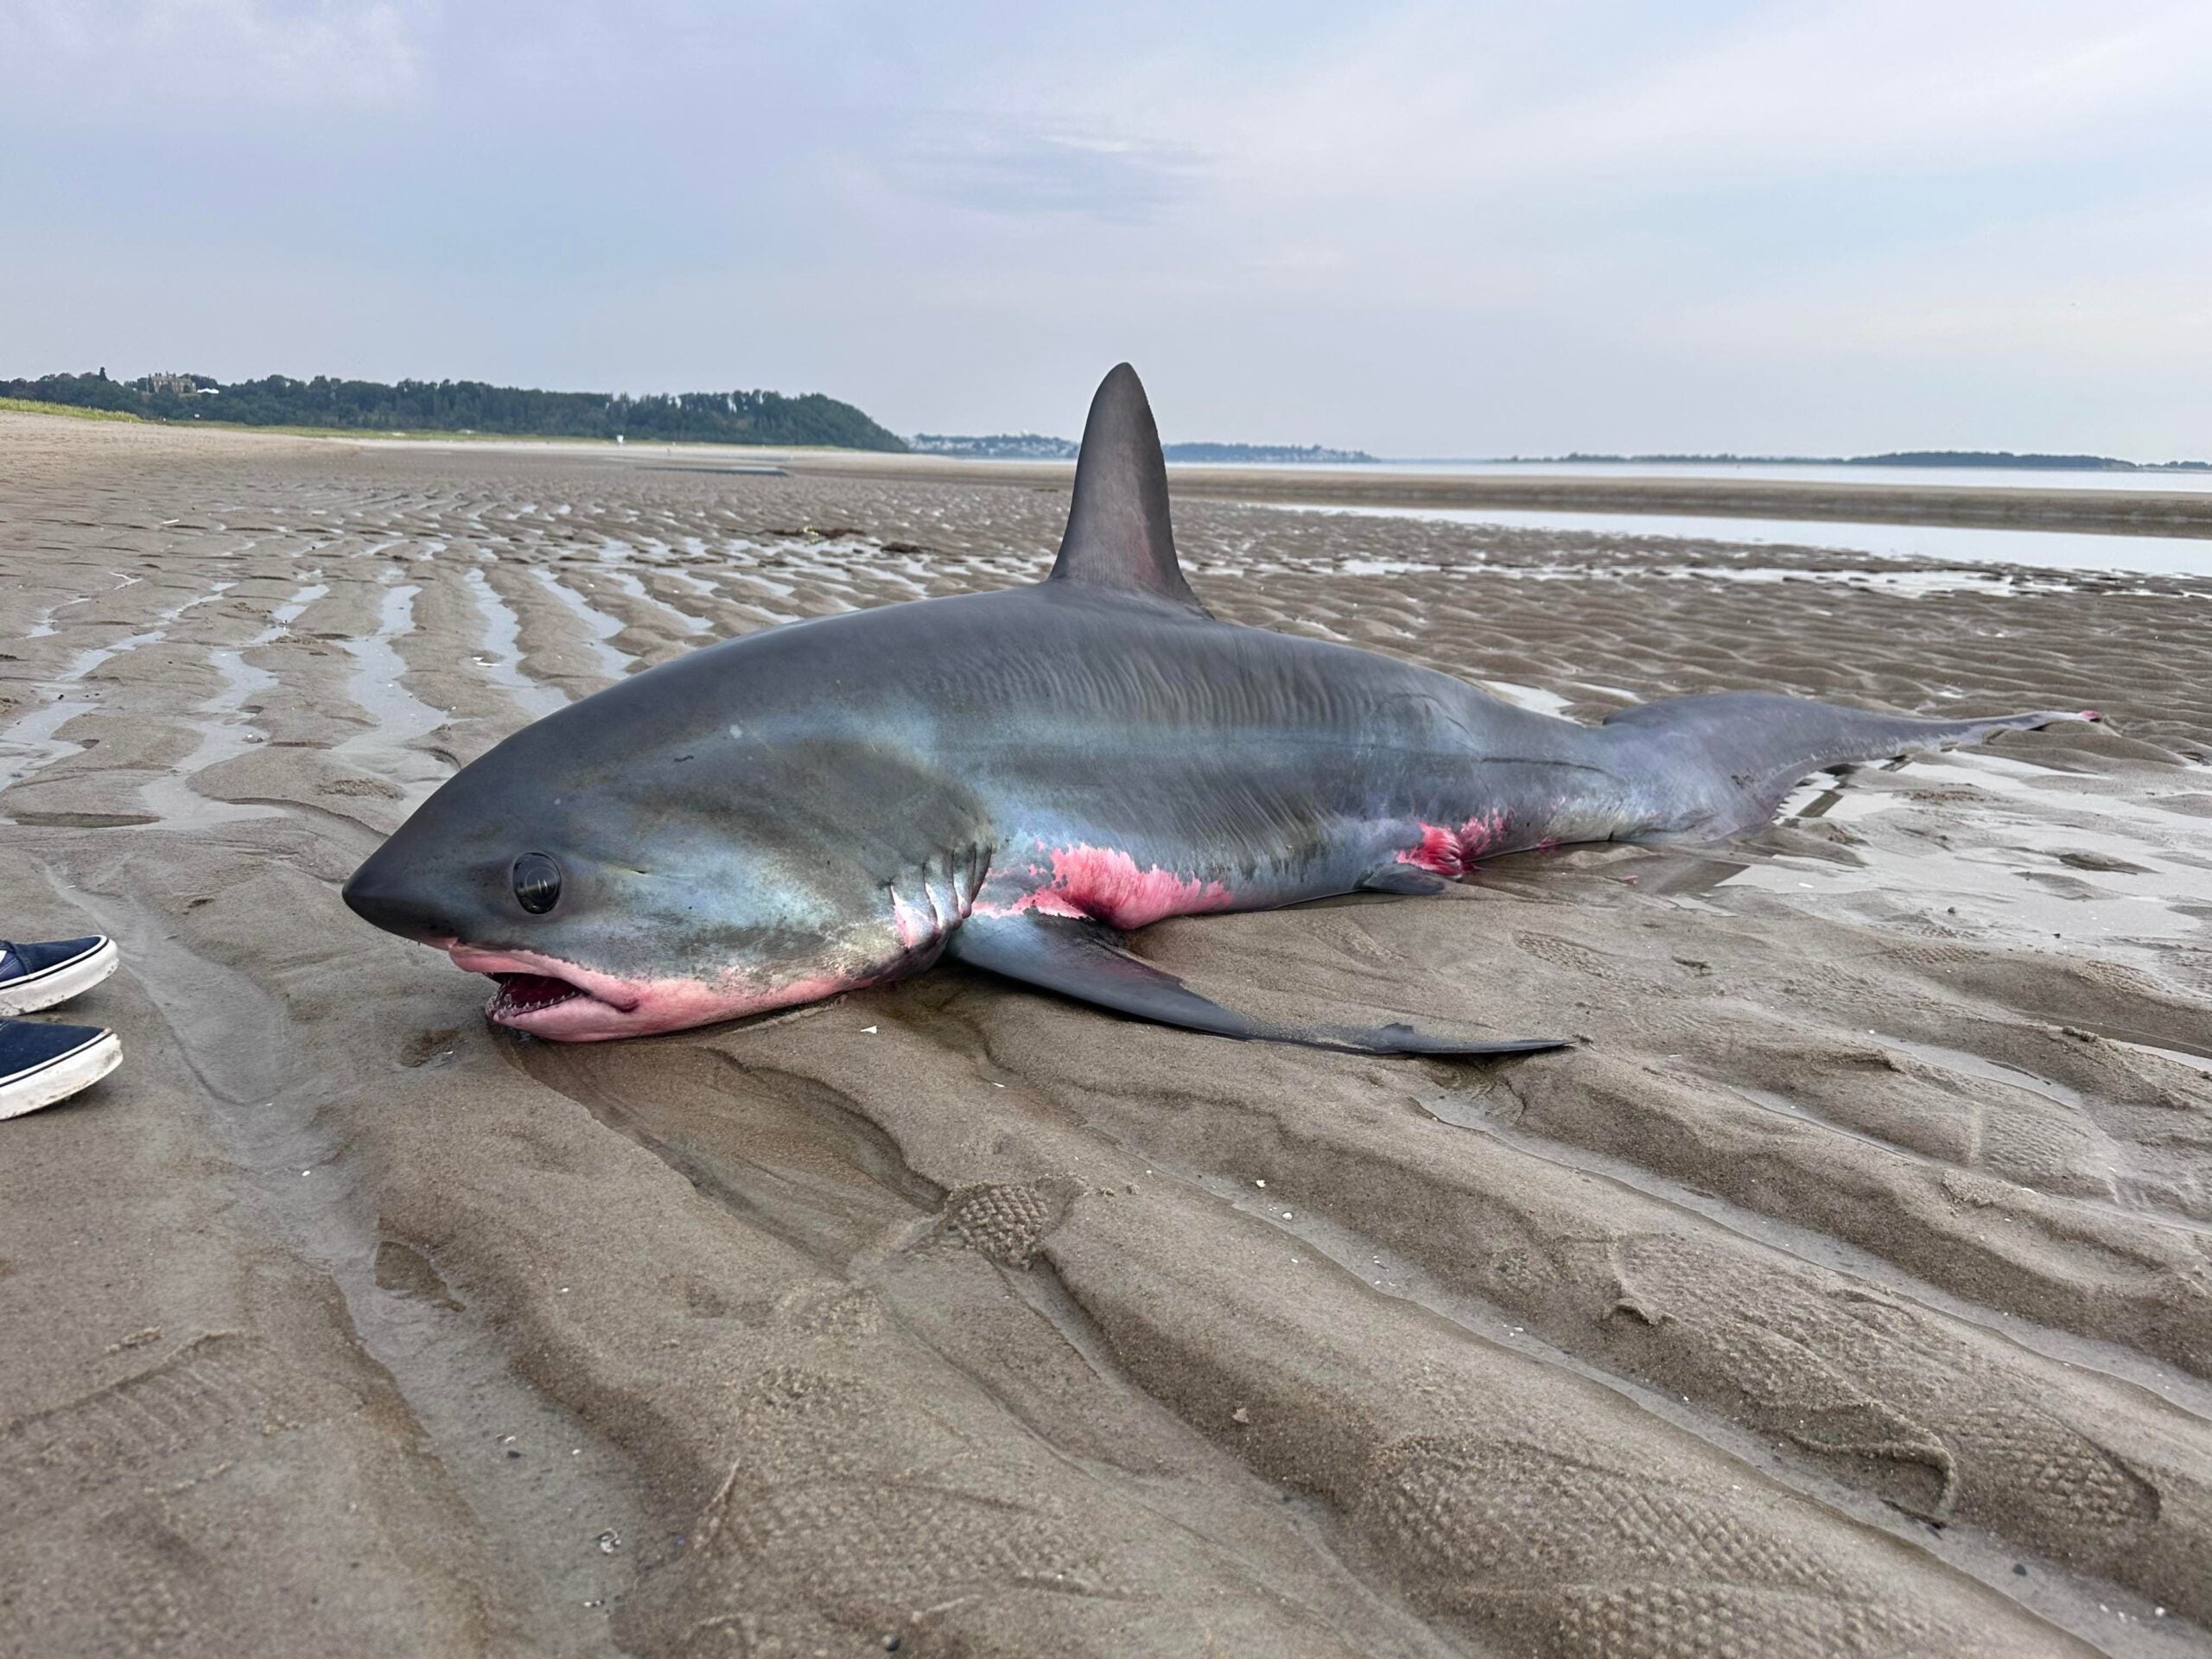 A thresher shark washed up on Crane Beach in Ipswich, Massachusetts.